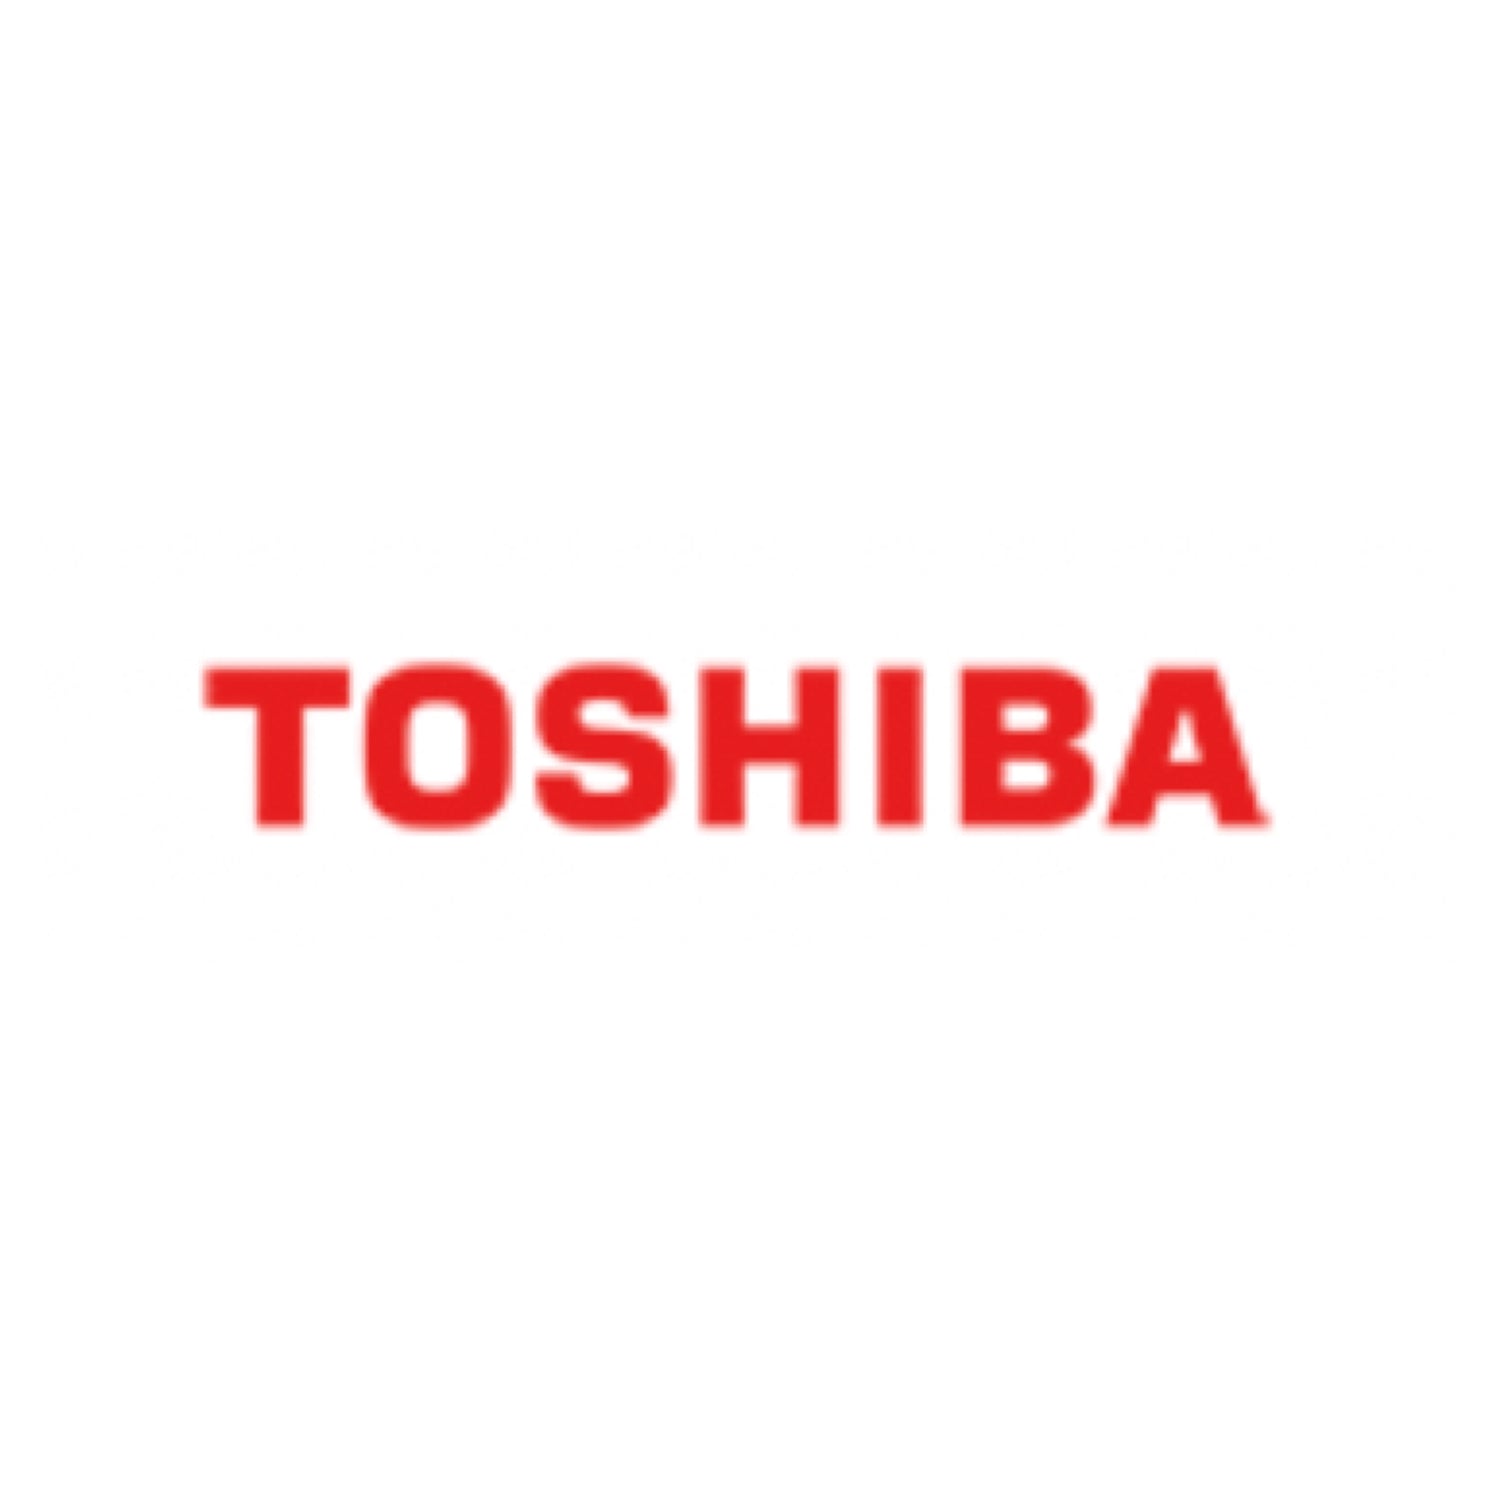 TOSHIBA INTERNATIONAL CORP.